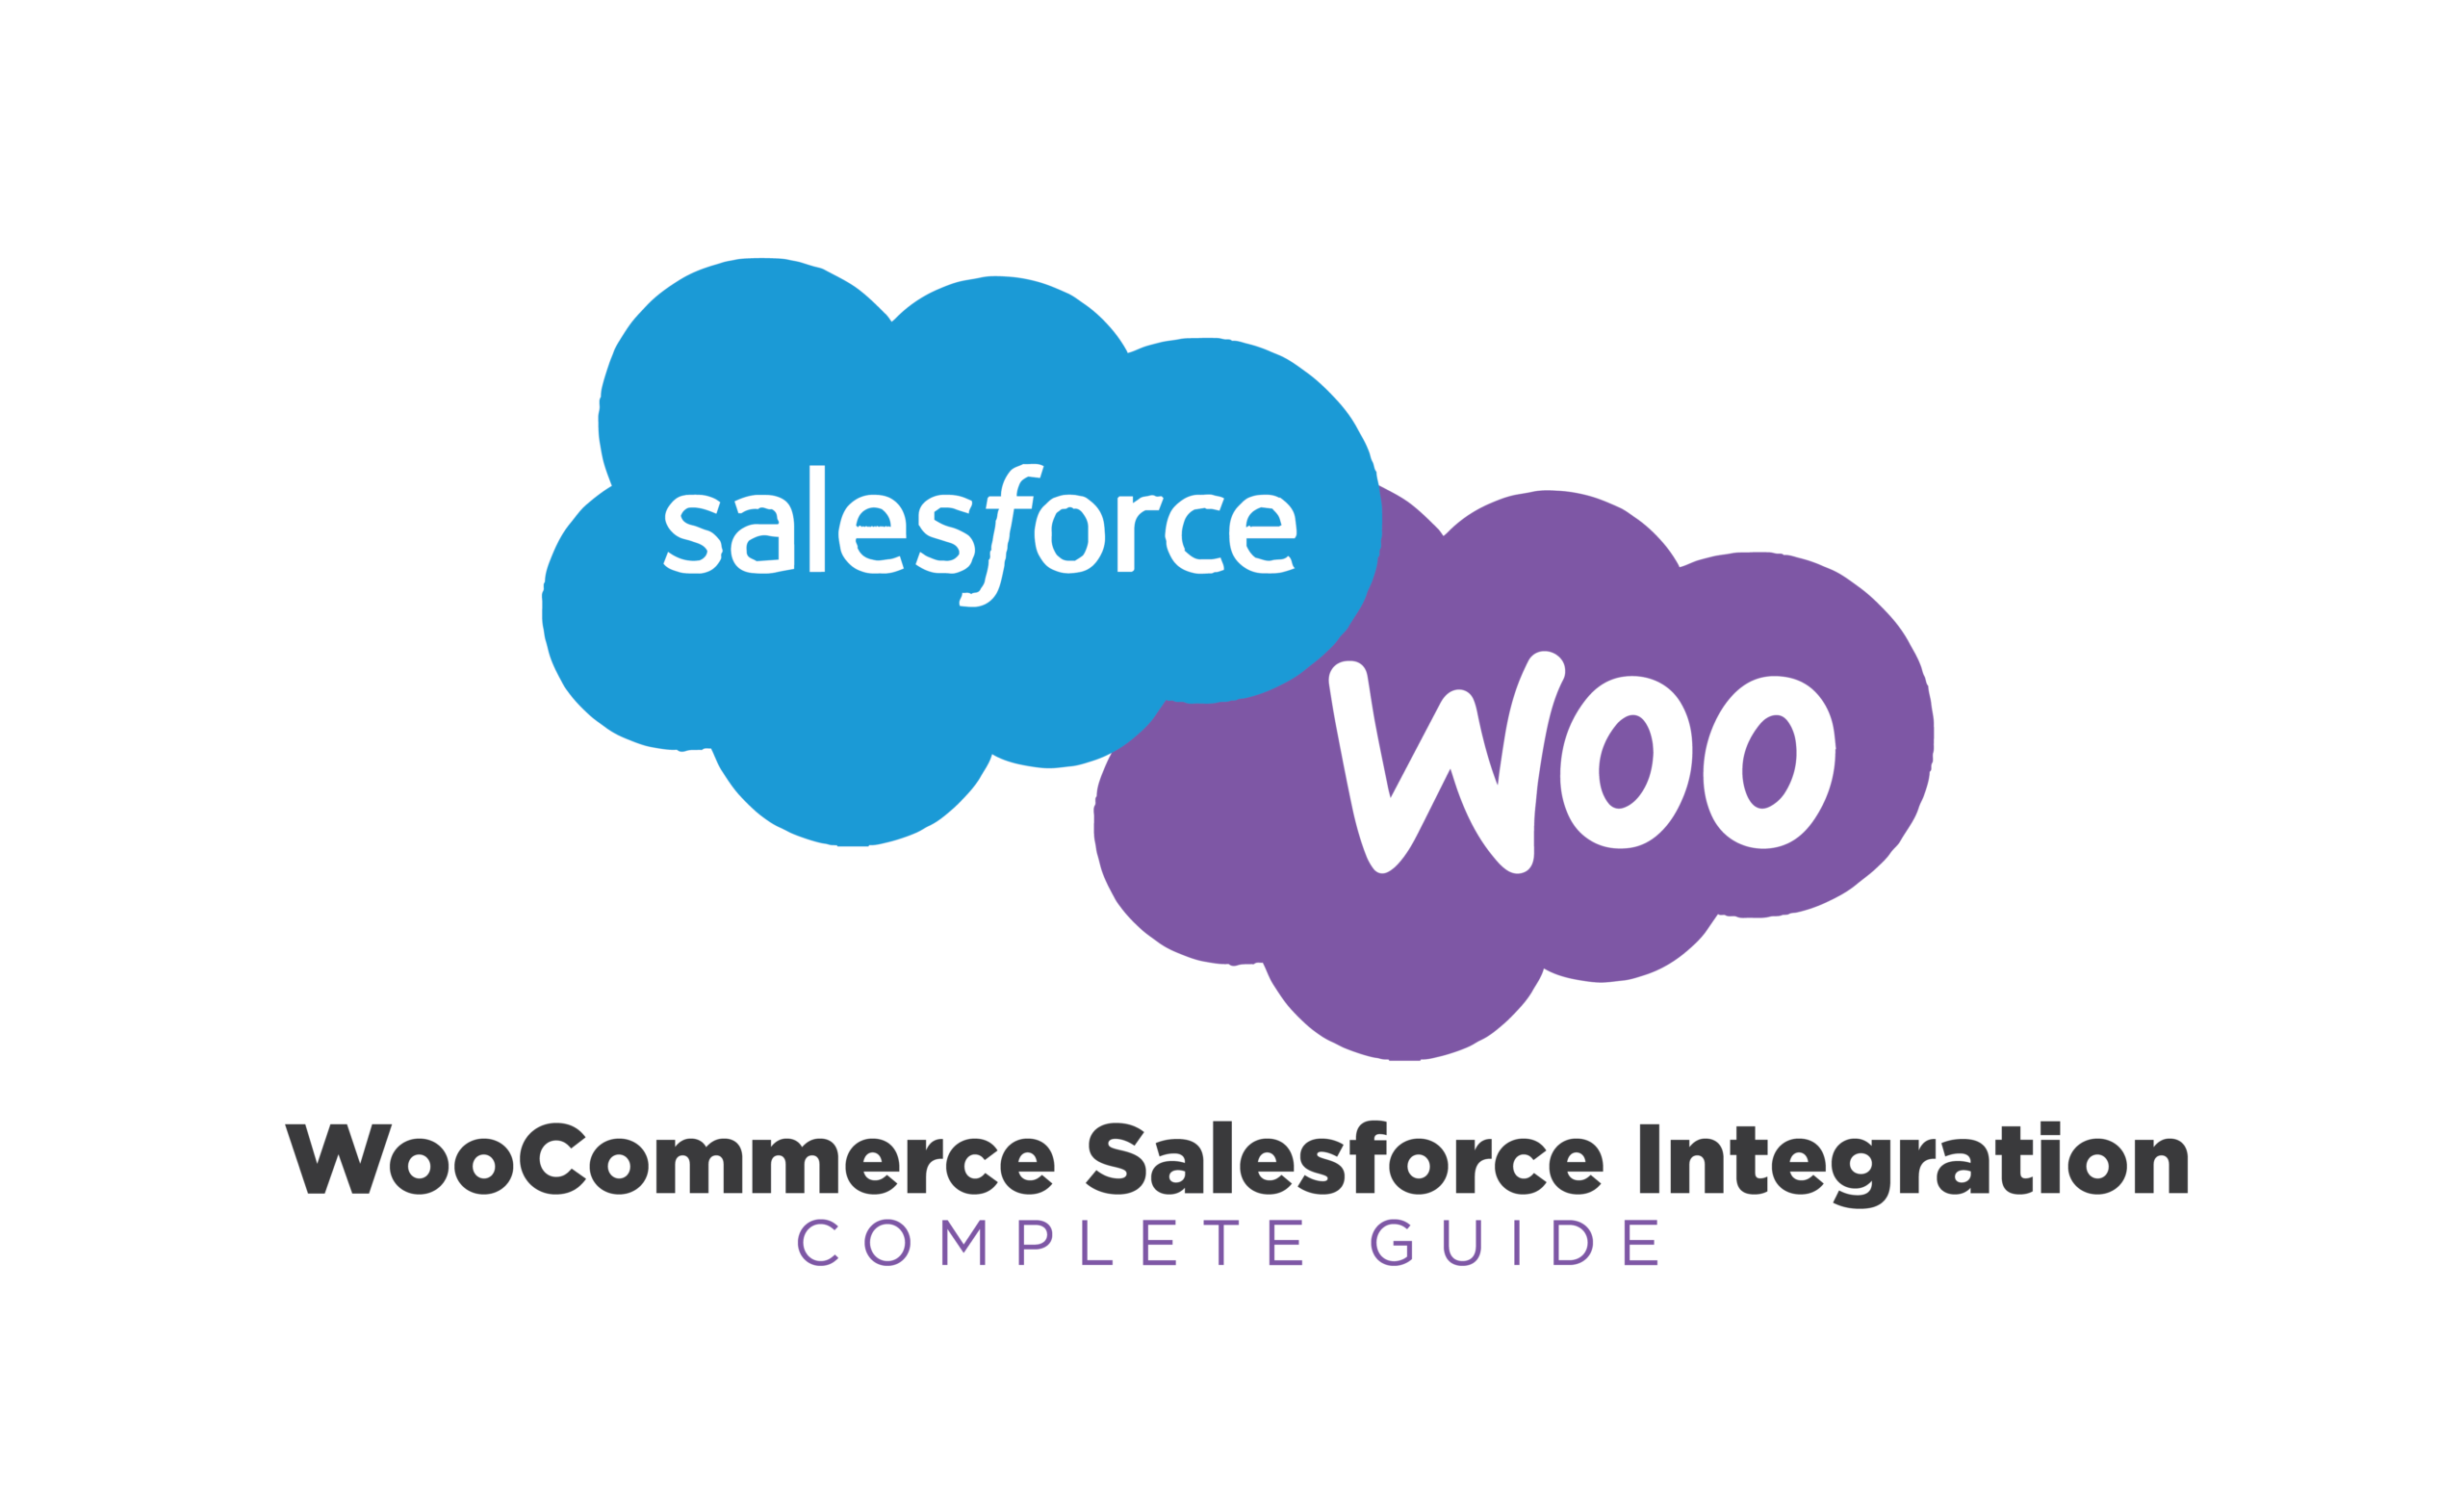 WooCommerce Salesforce Integration